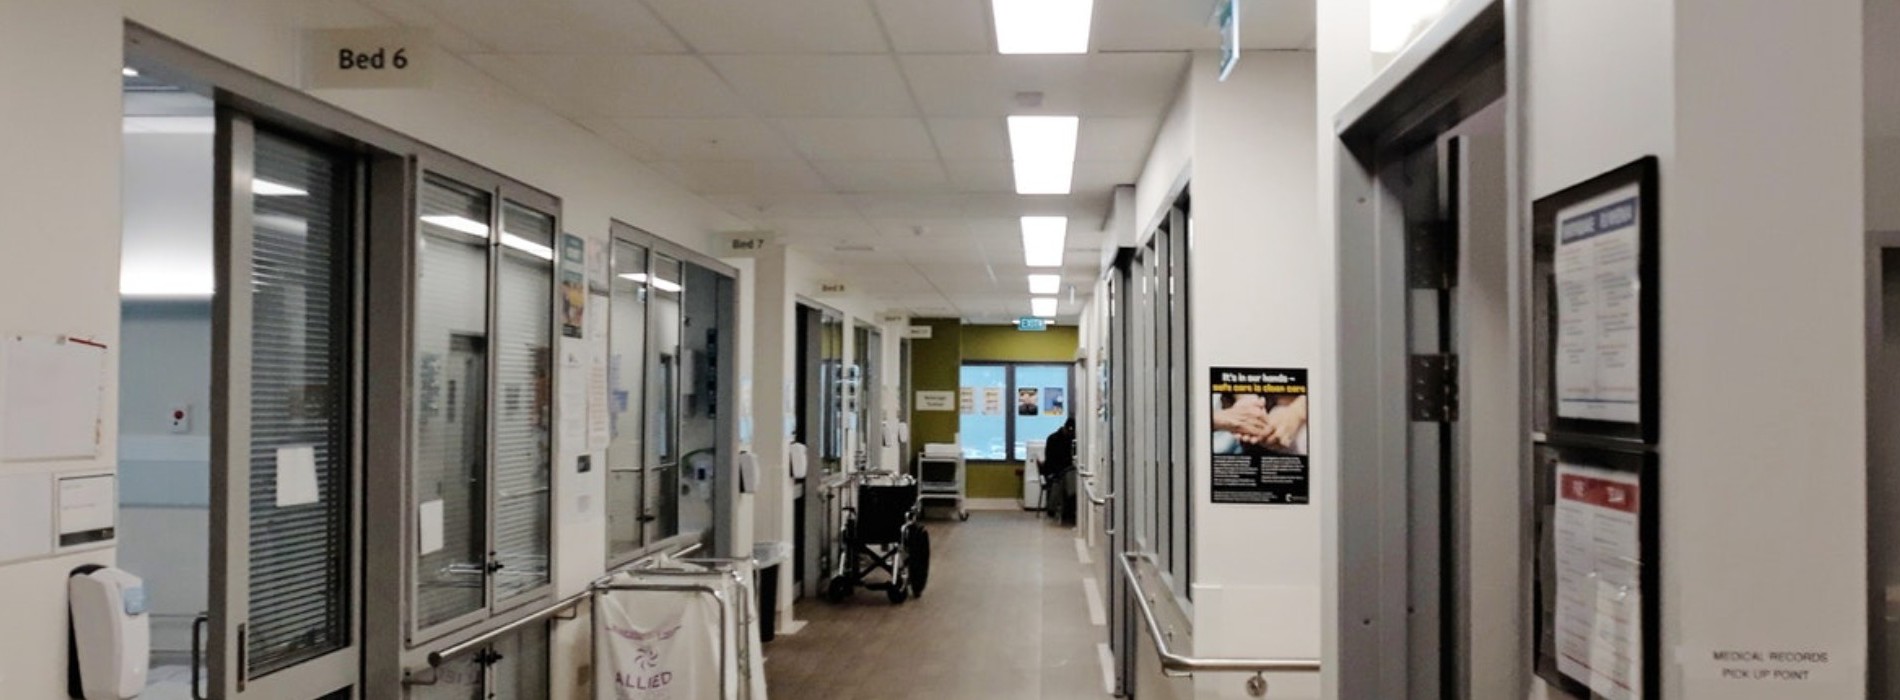 Wellington Hospital Corridor Header2